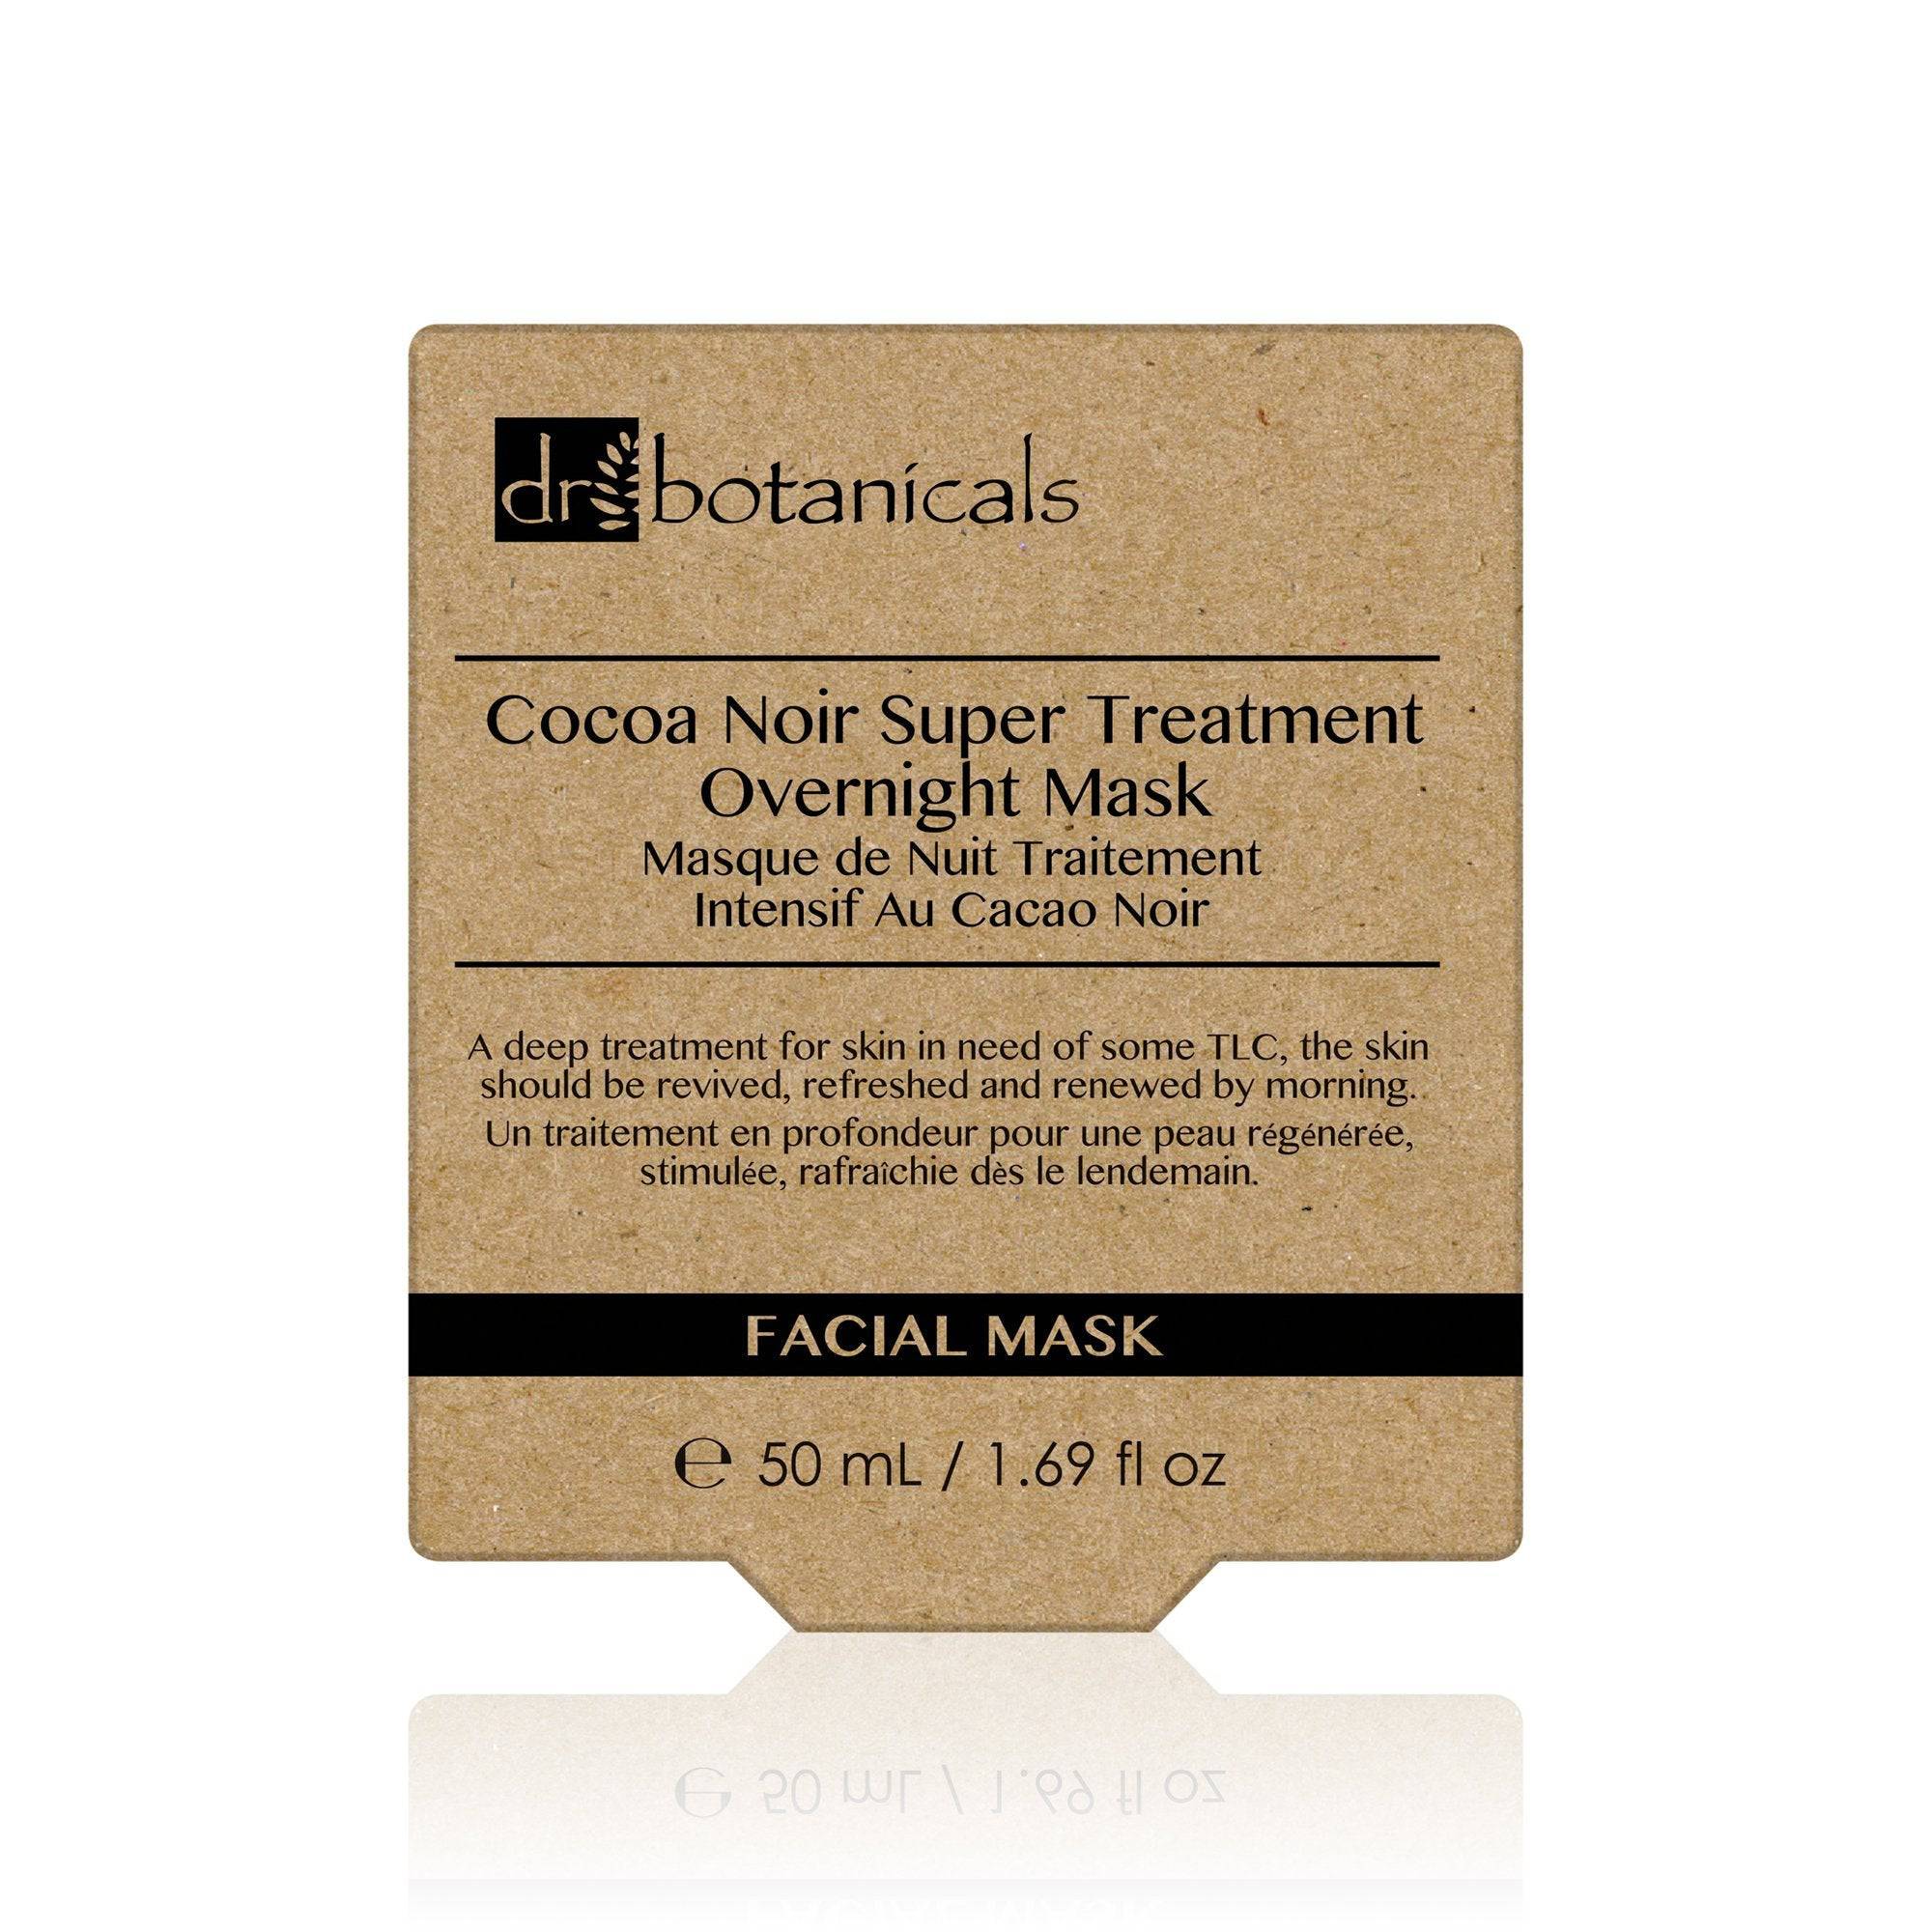 Cocoa Noir Super Treatment Overnight Mask 50ml